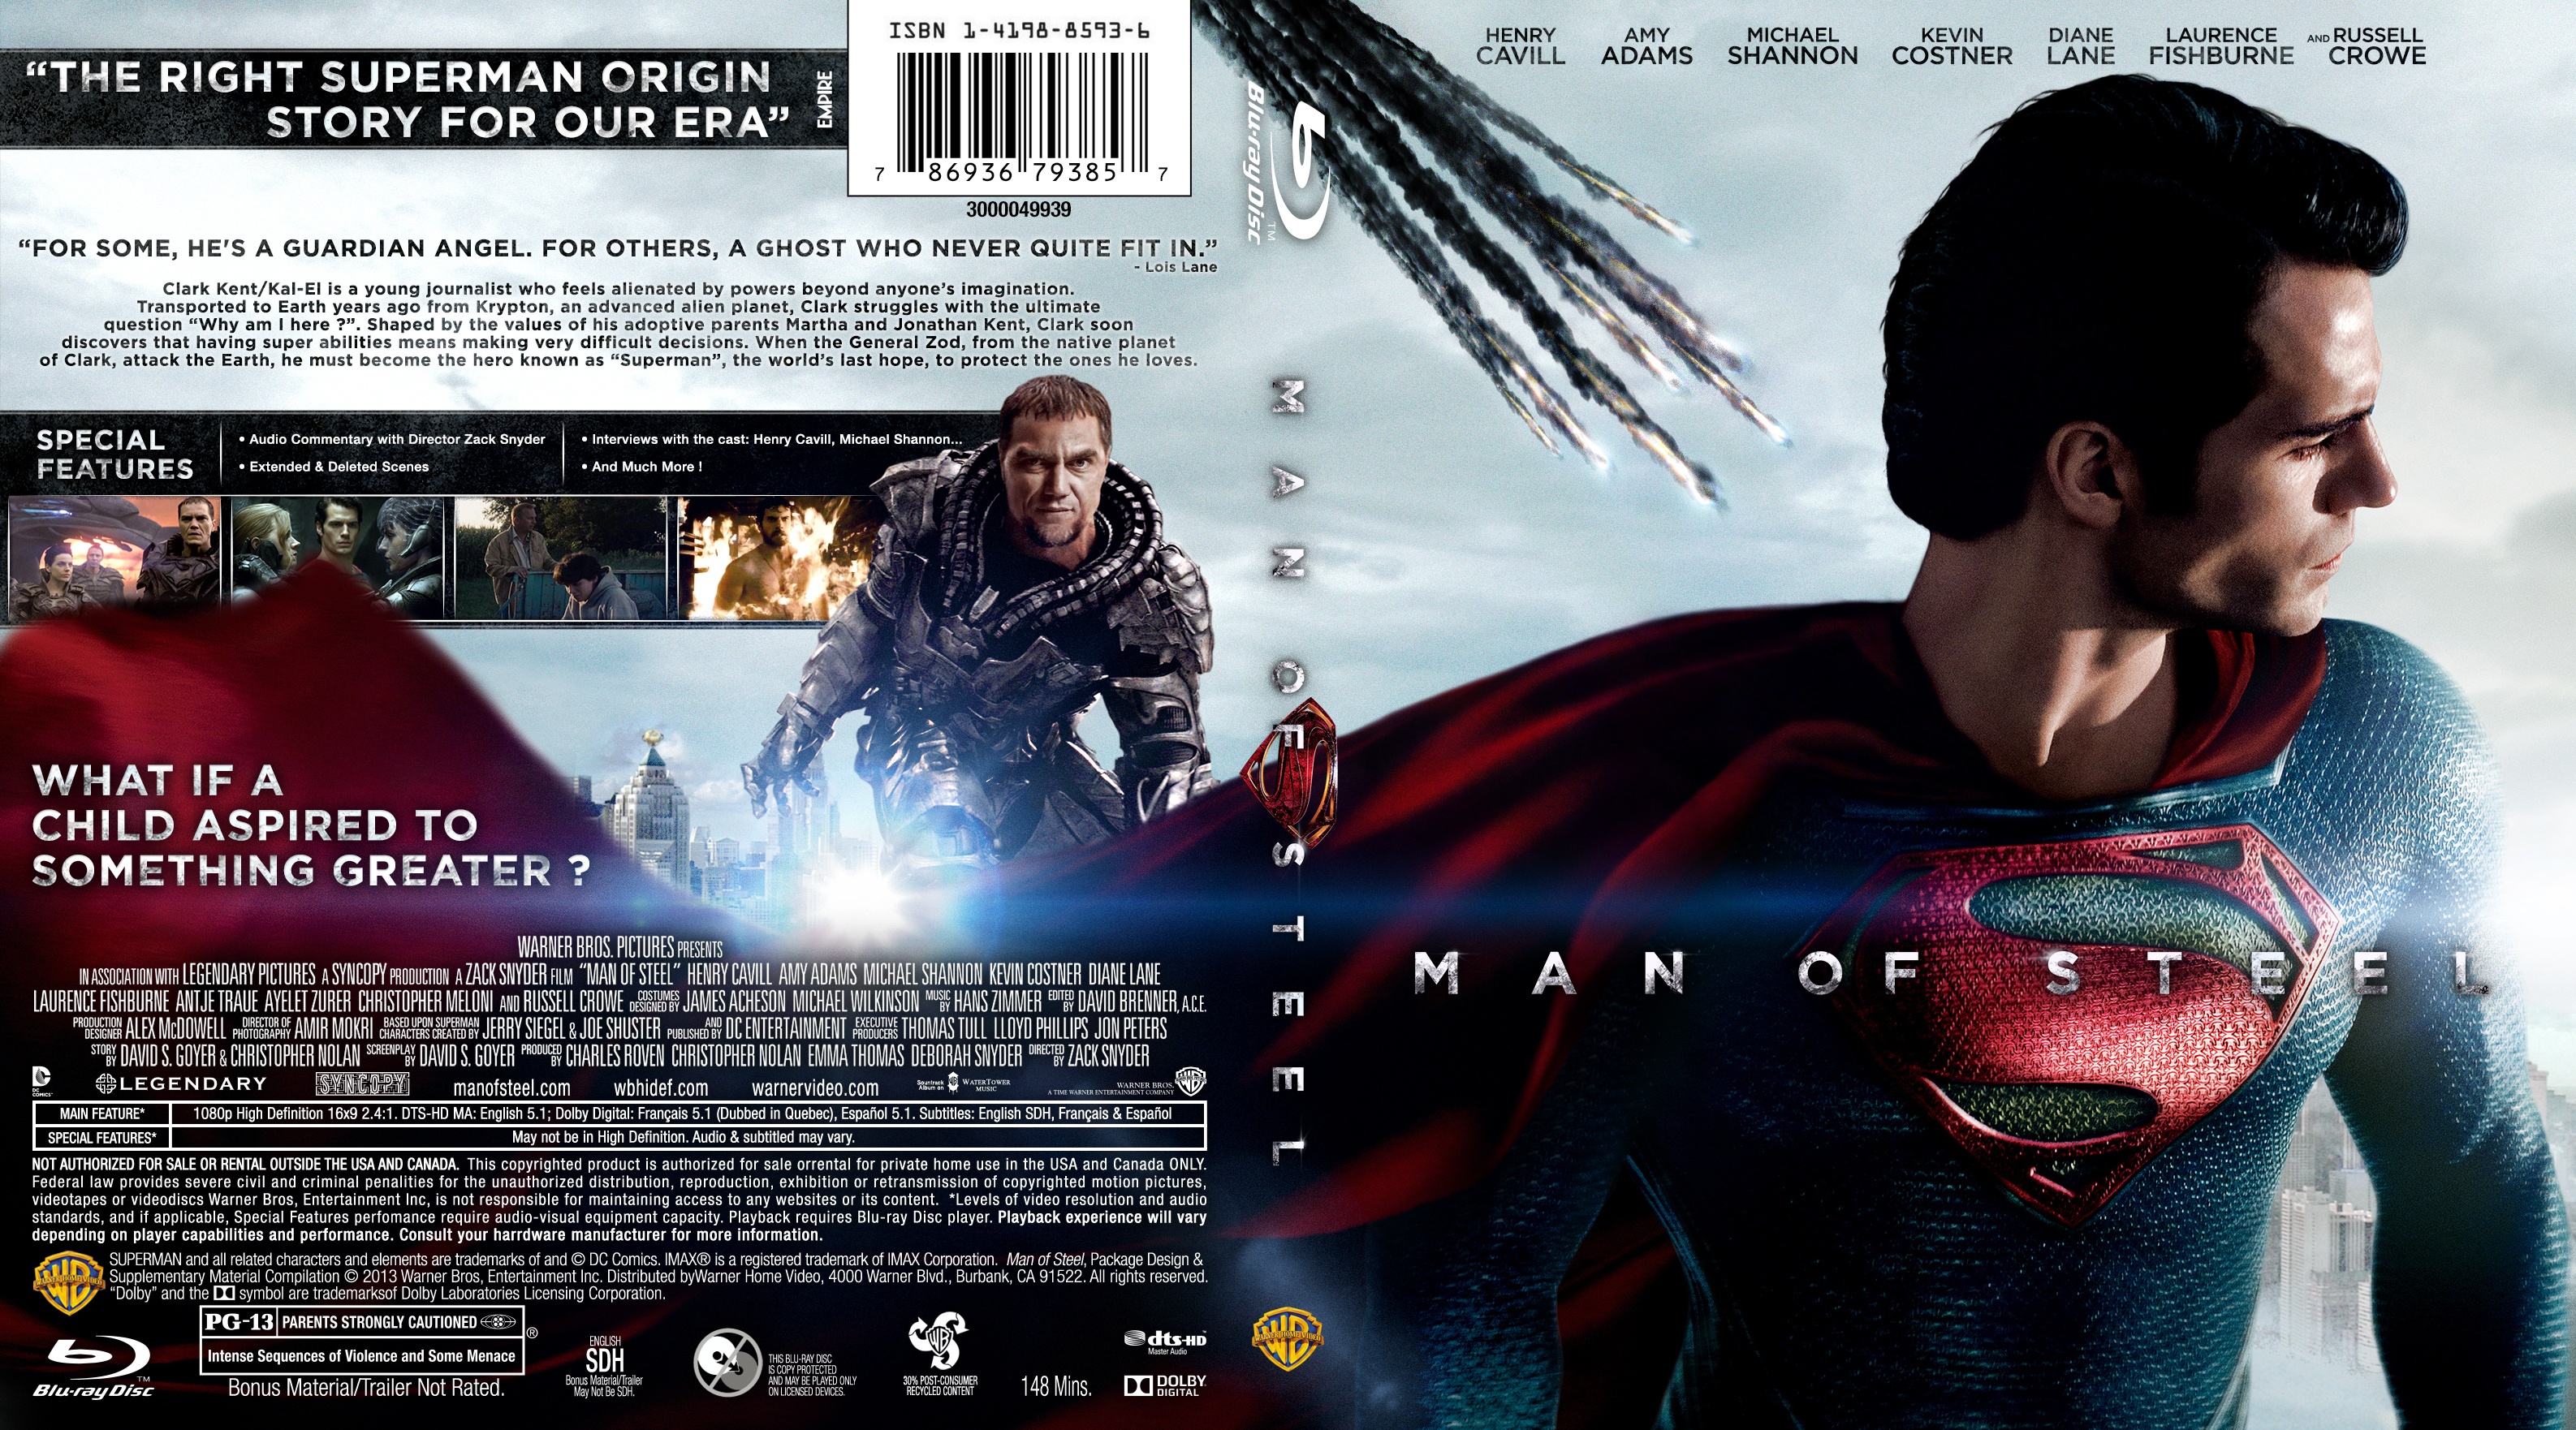 man of steel dvd cover art